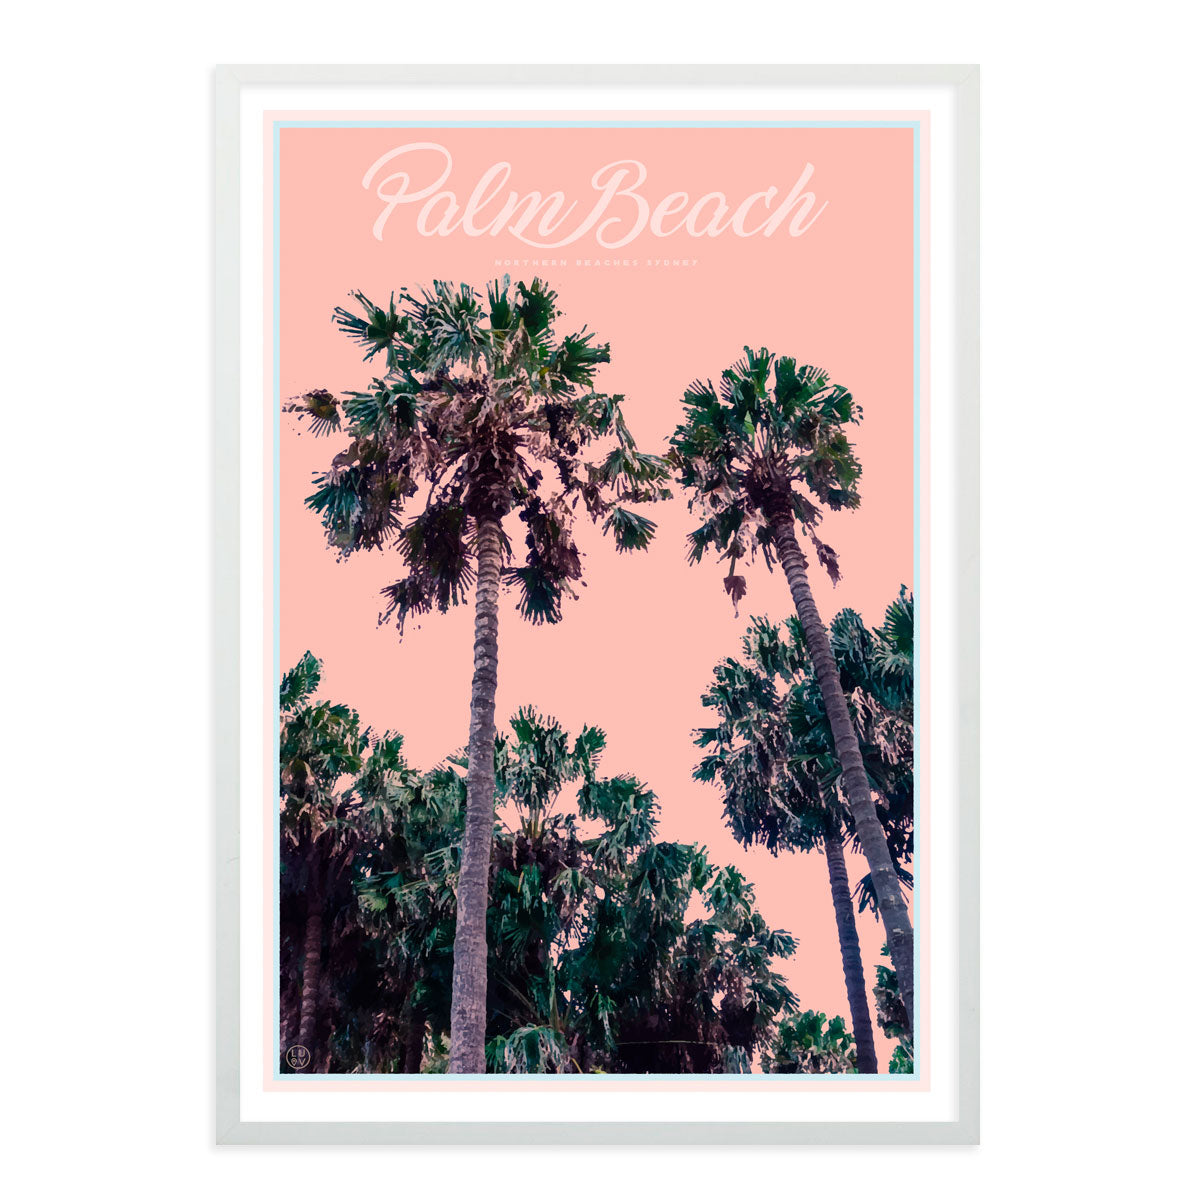 Palm Beach Palms - Sydney - original design white framed print by Placesweluv 